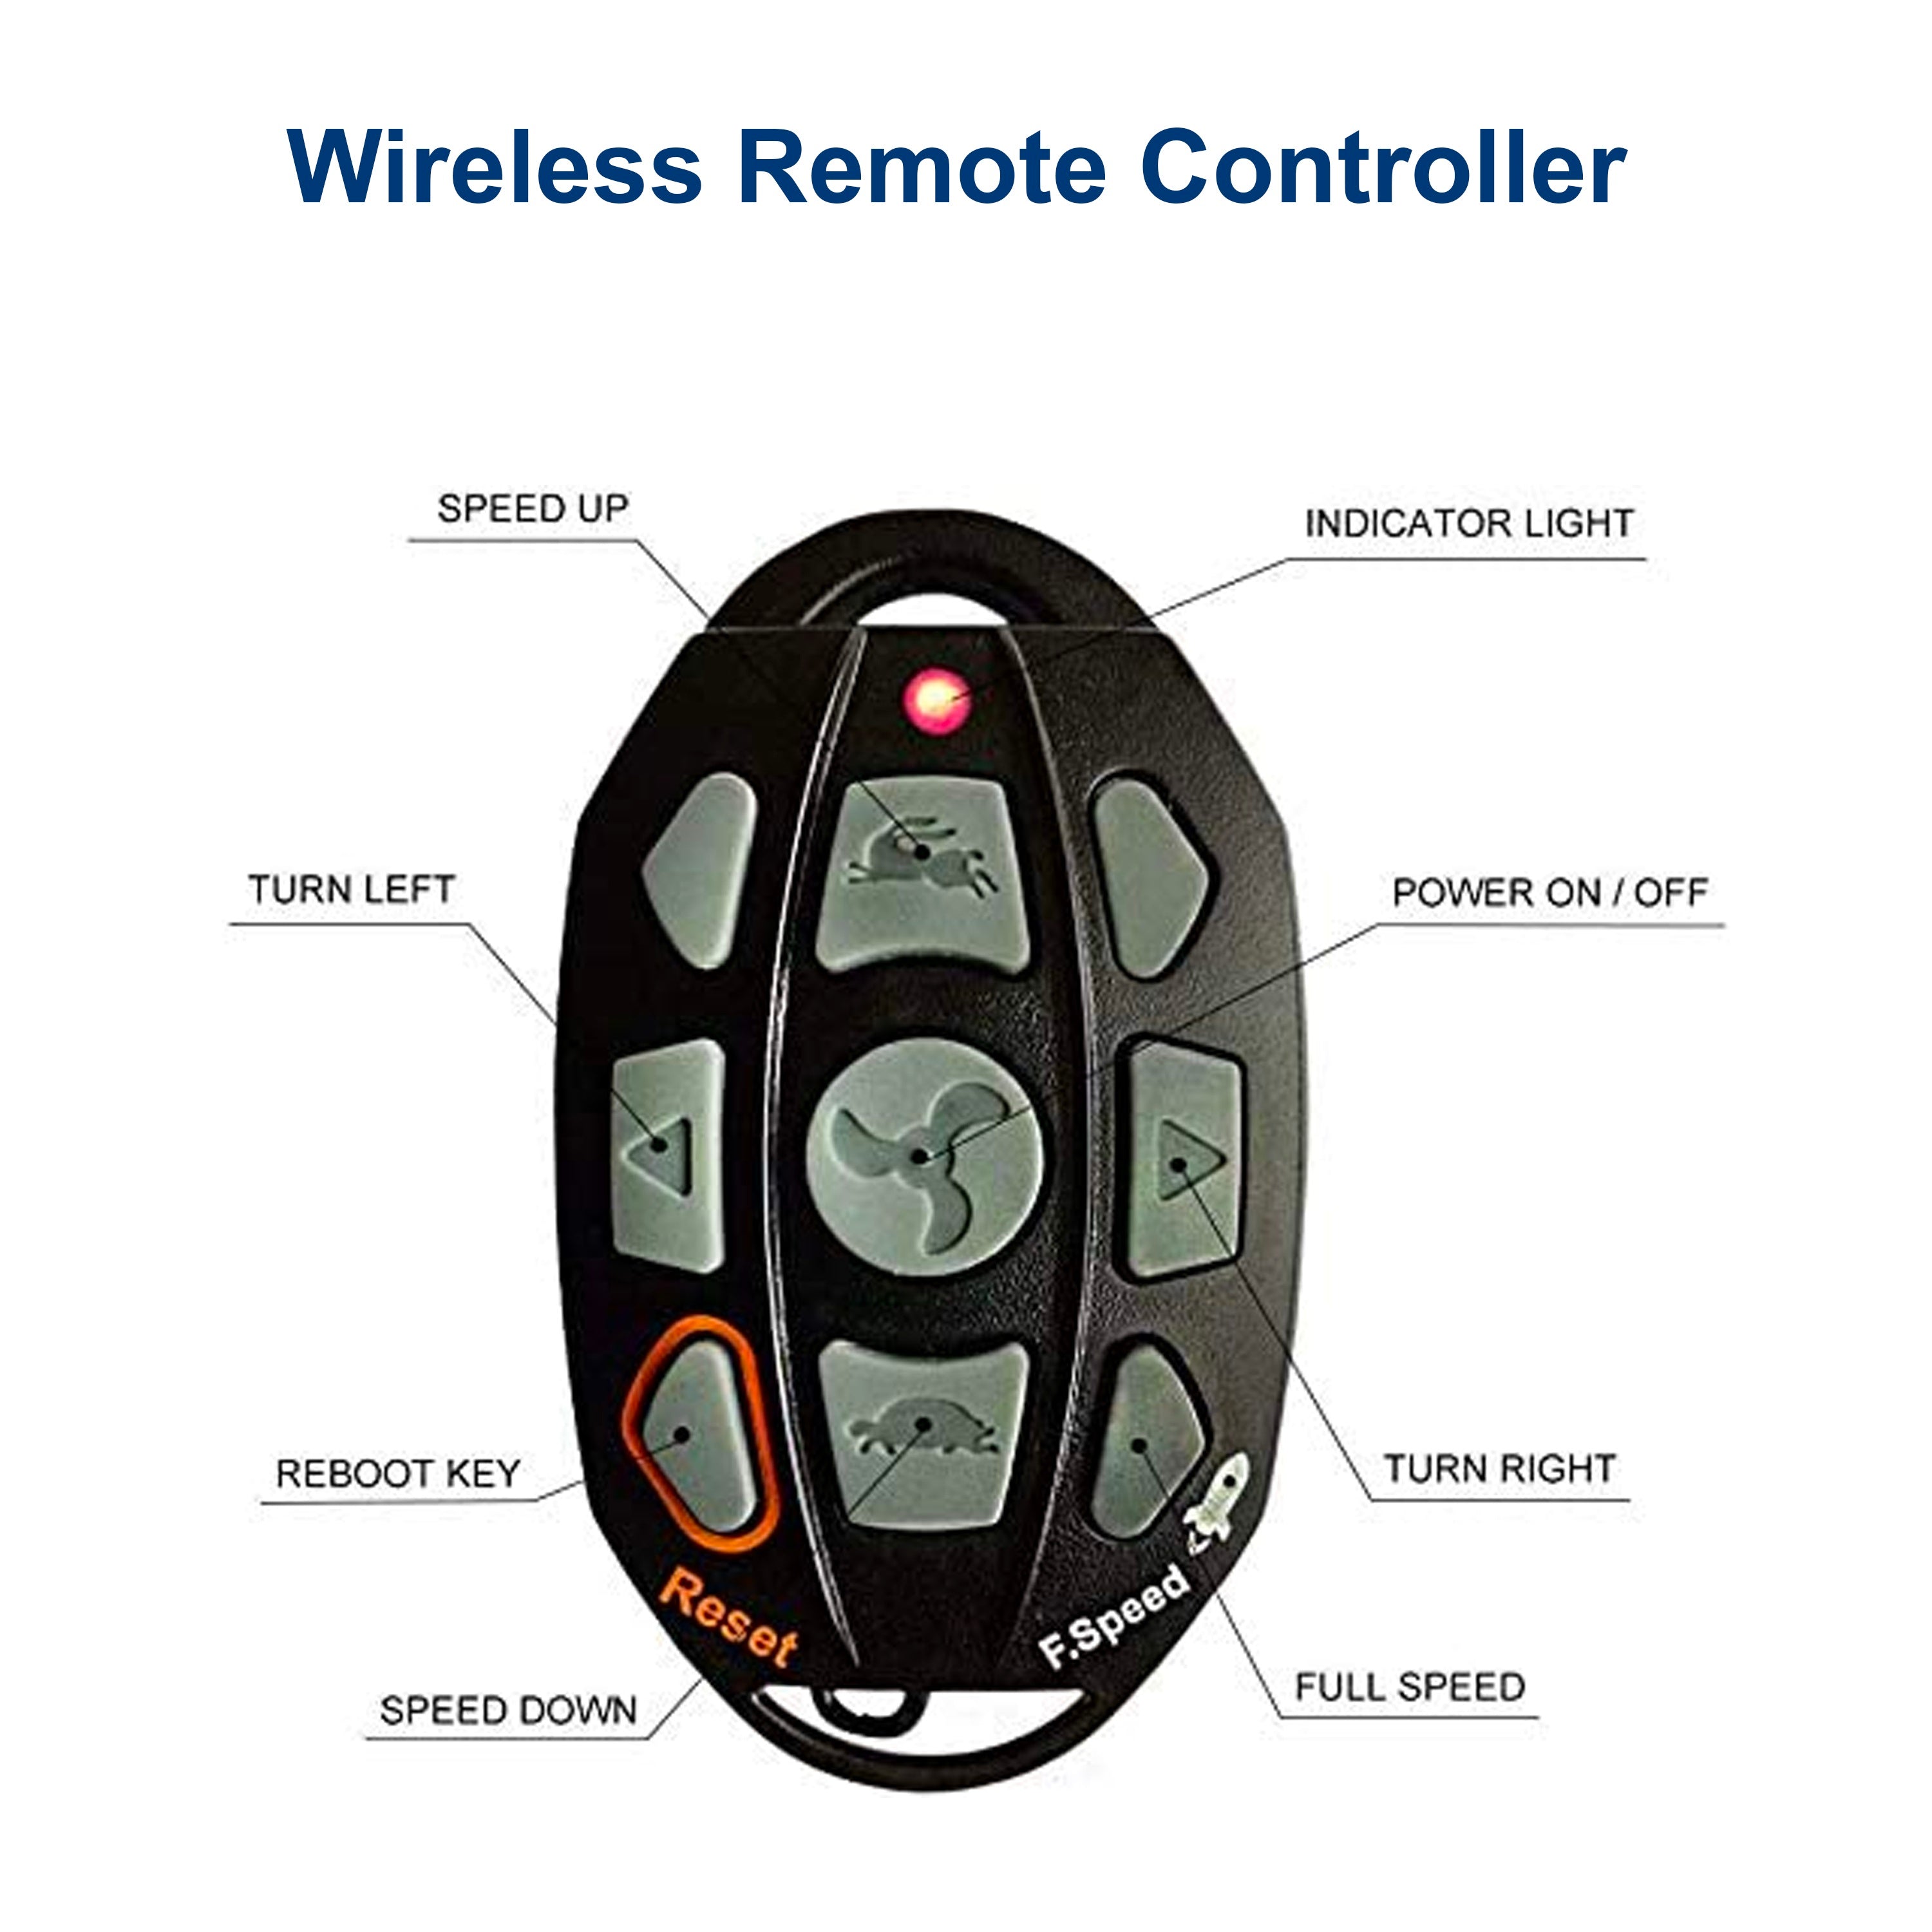 Cayman Wireless Remote Control